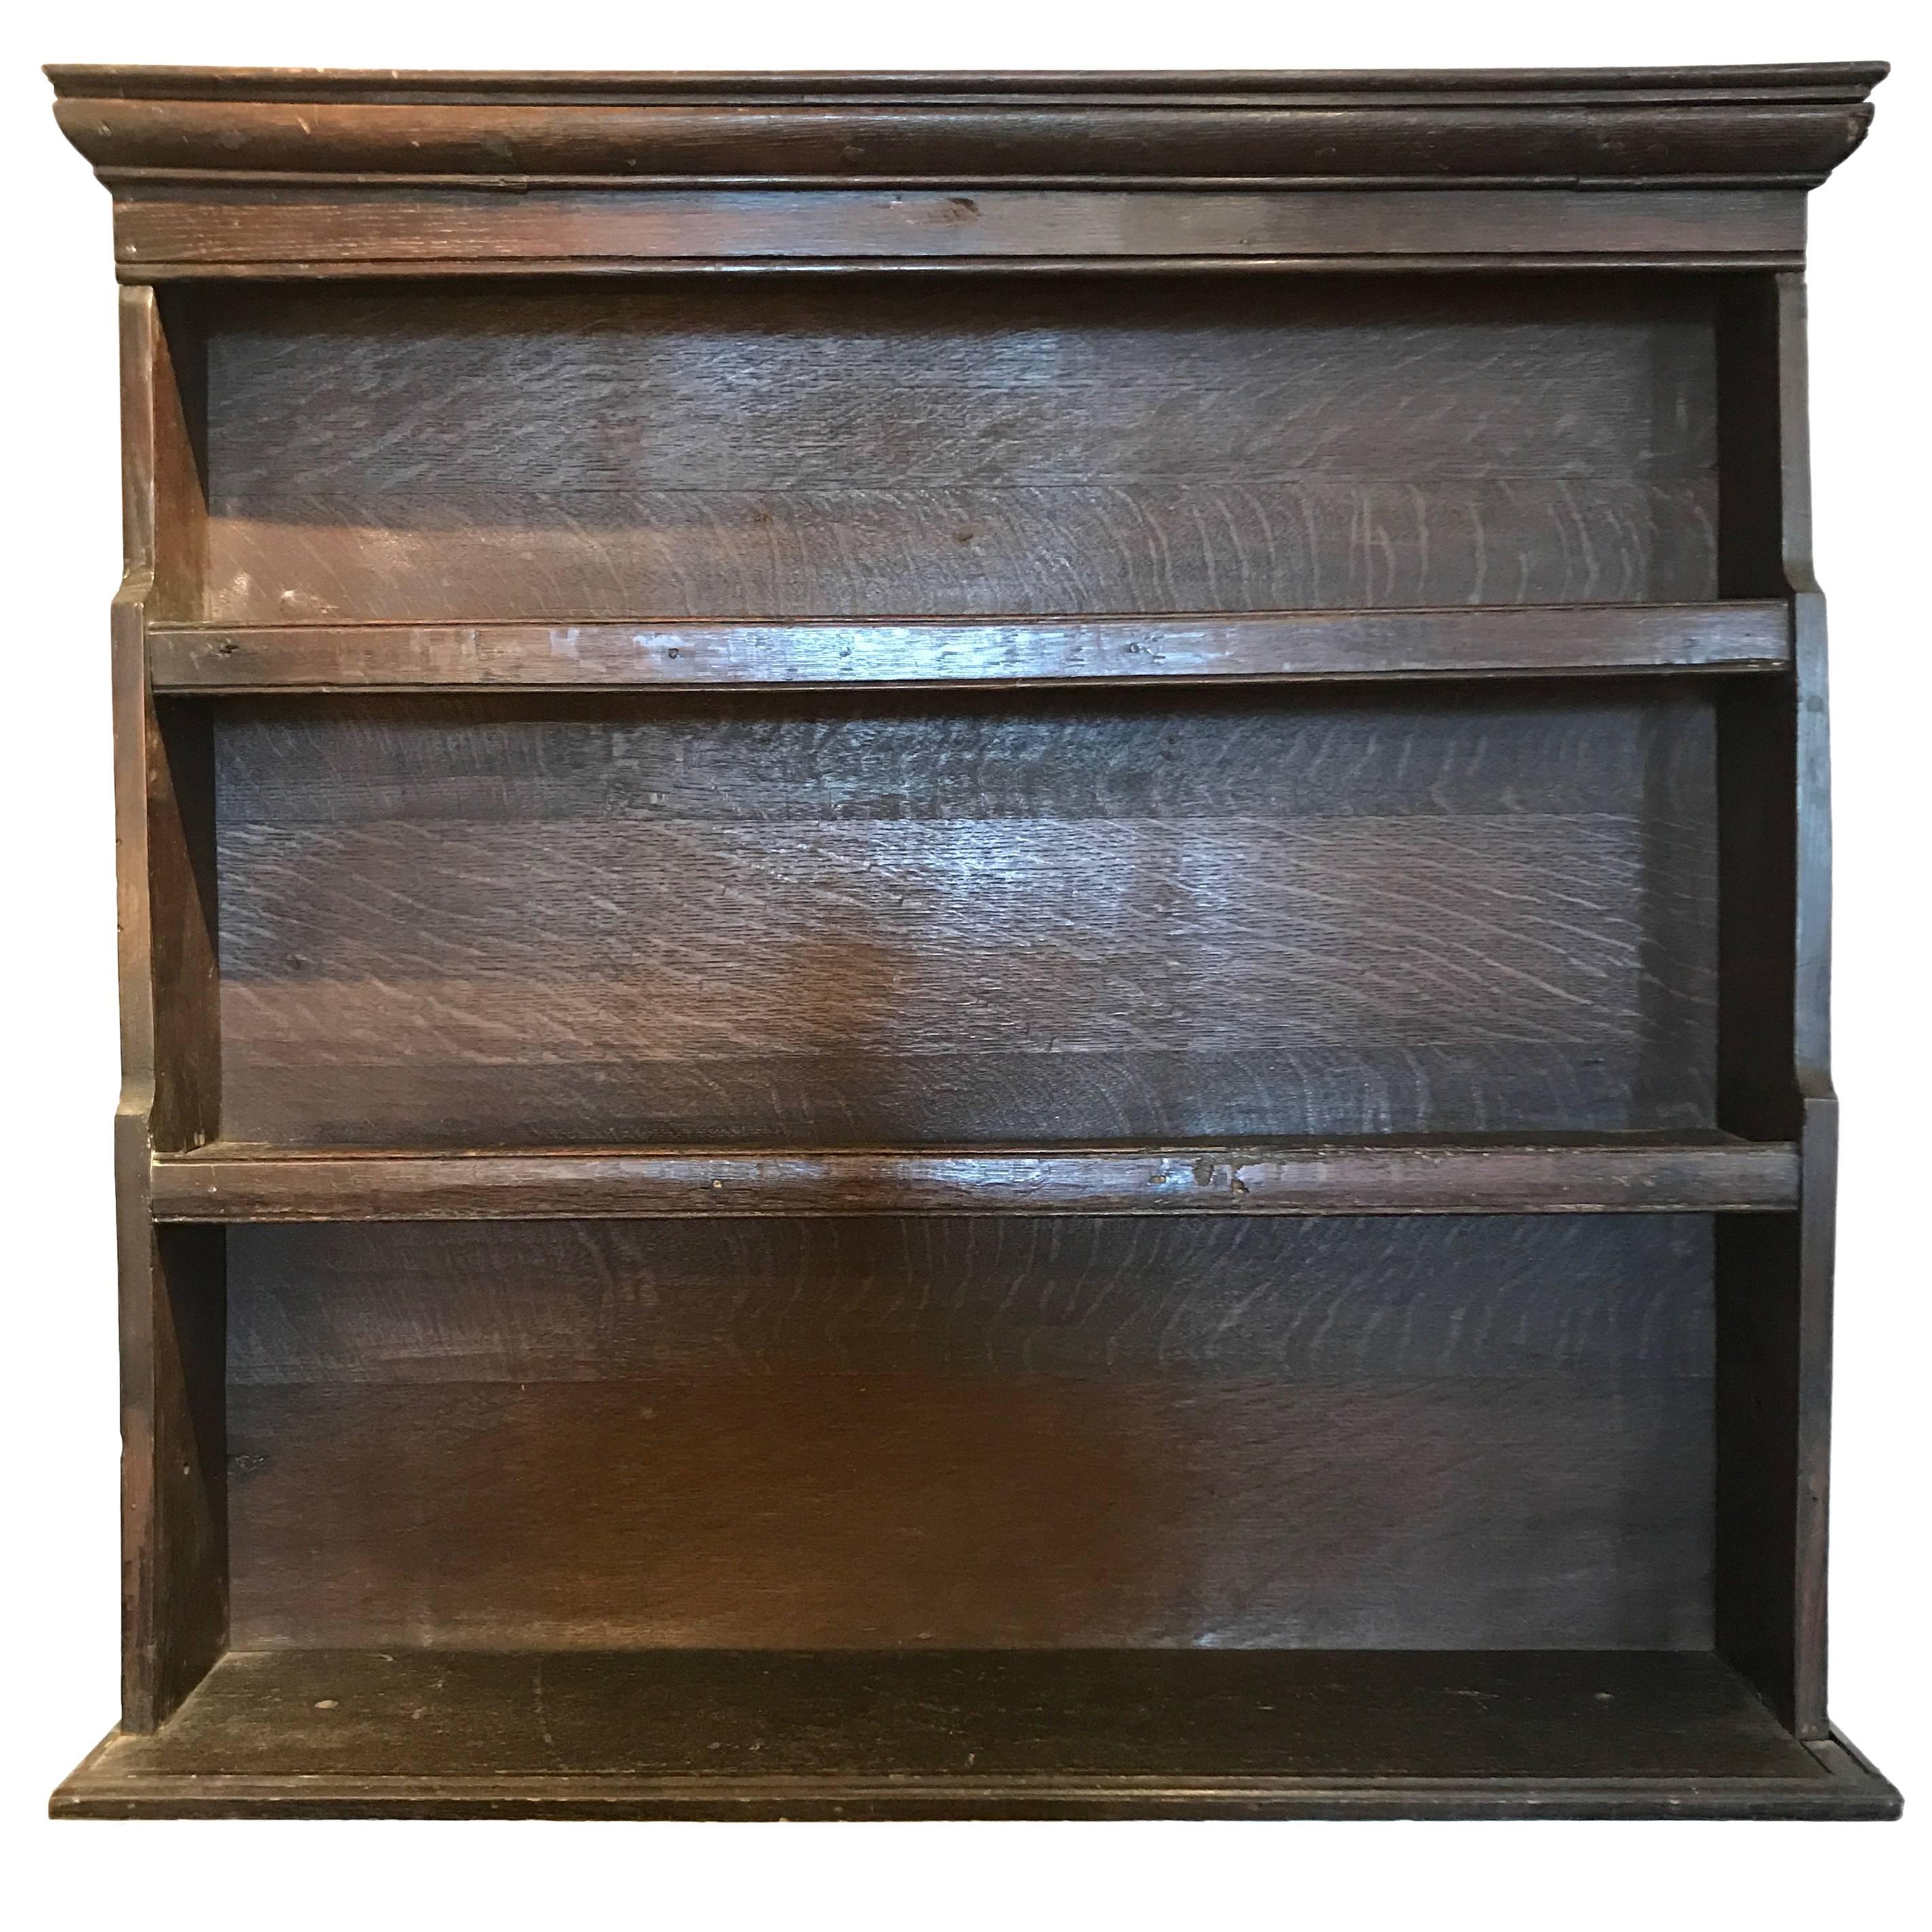 18th Century Oak Dish Shelf